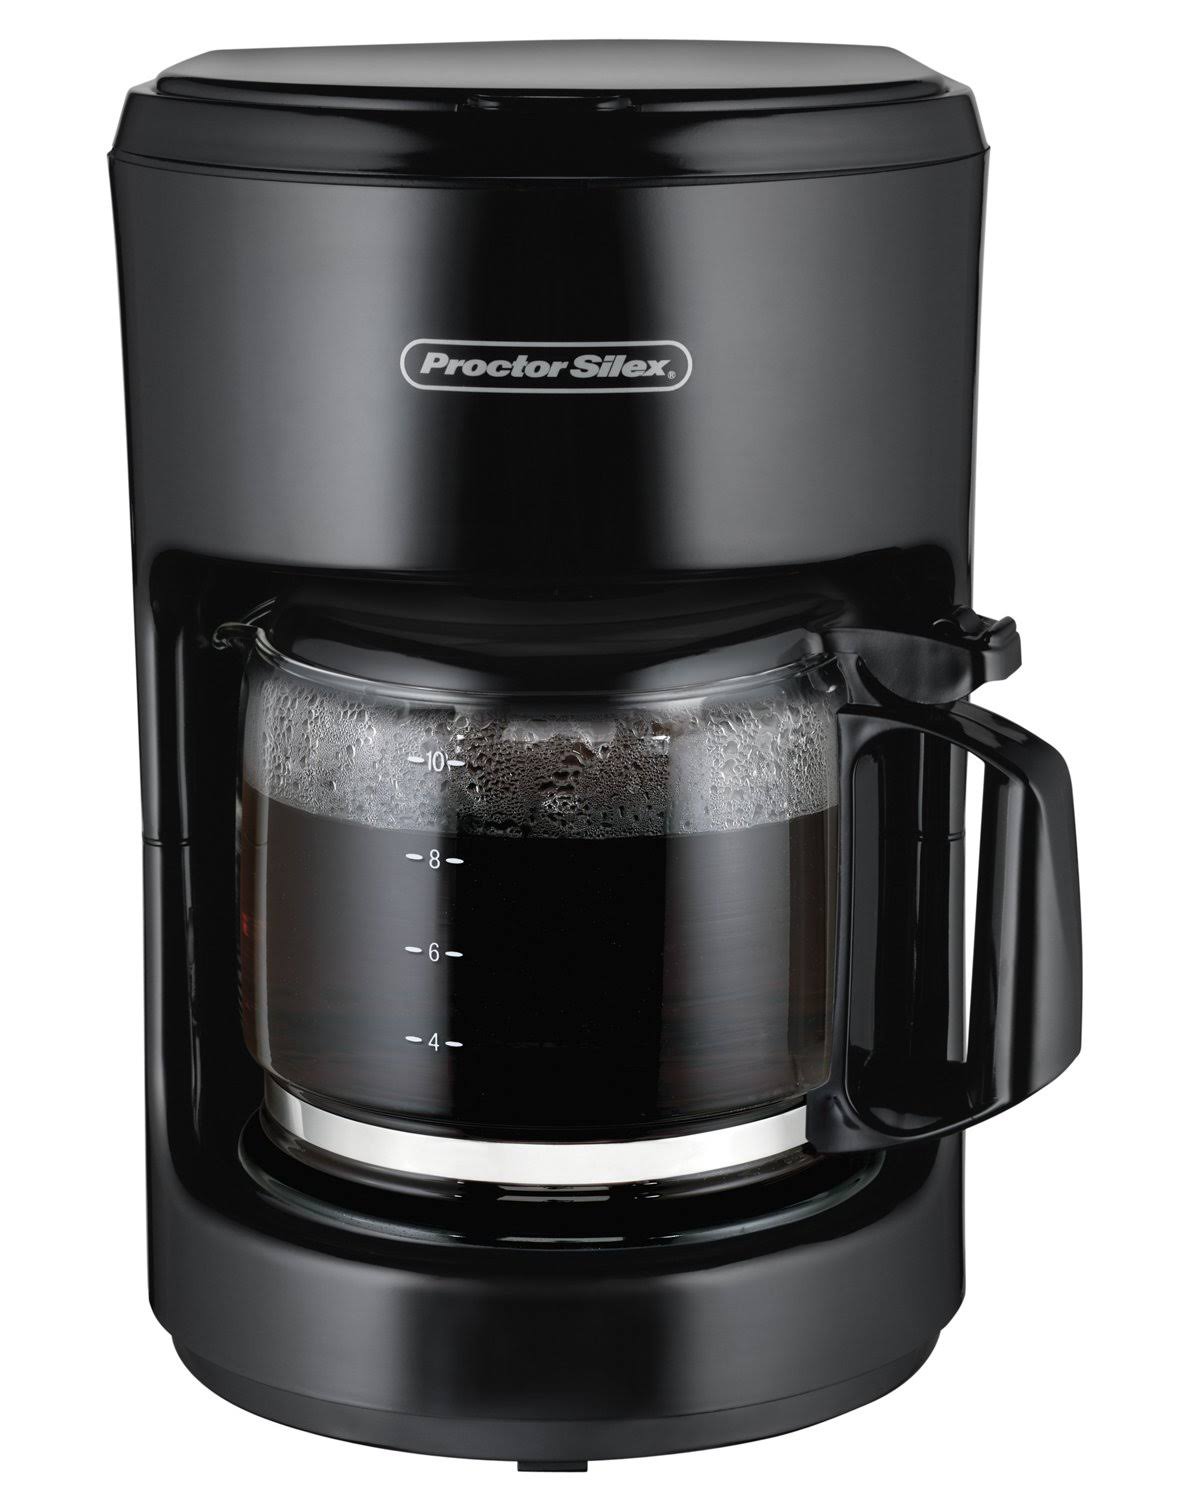 Proctor Silex 48351 10 Cup Coffeemaker - Black